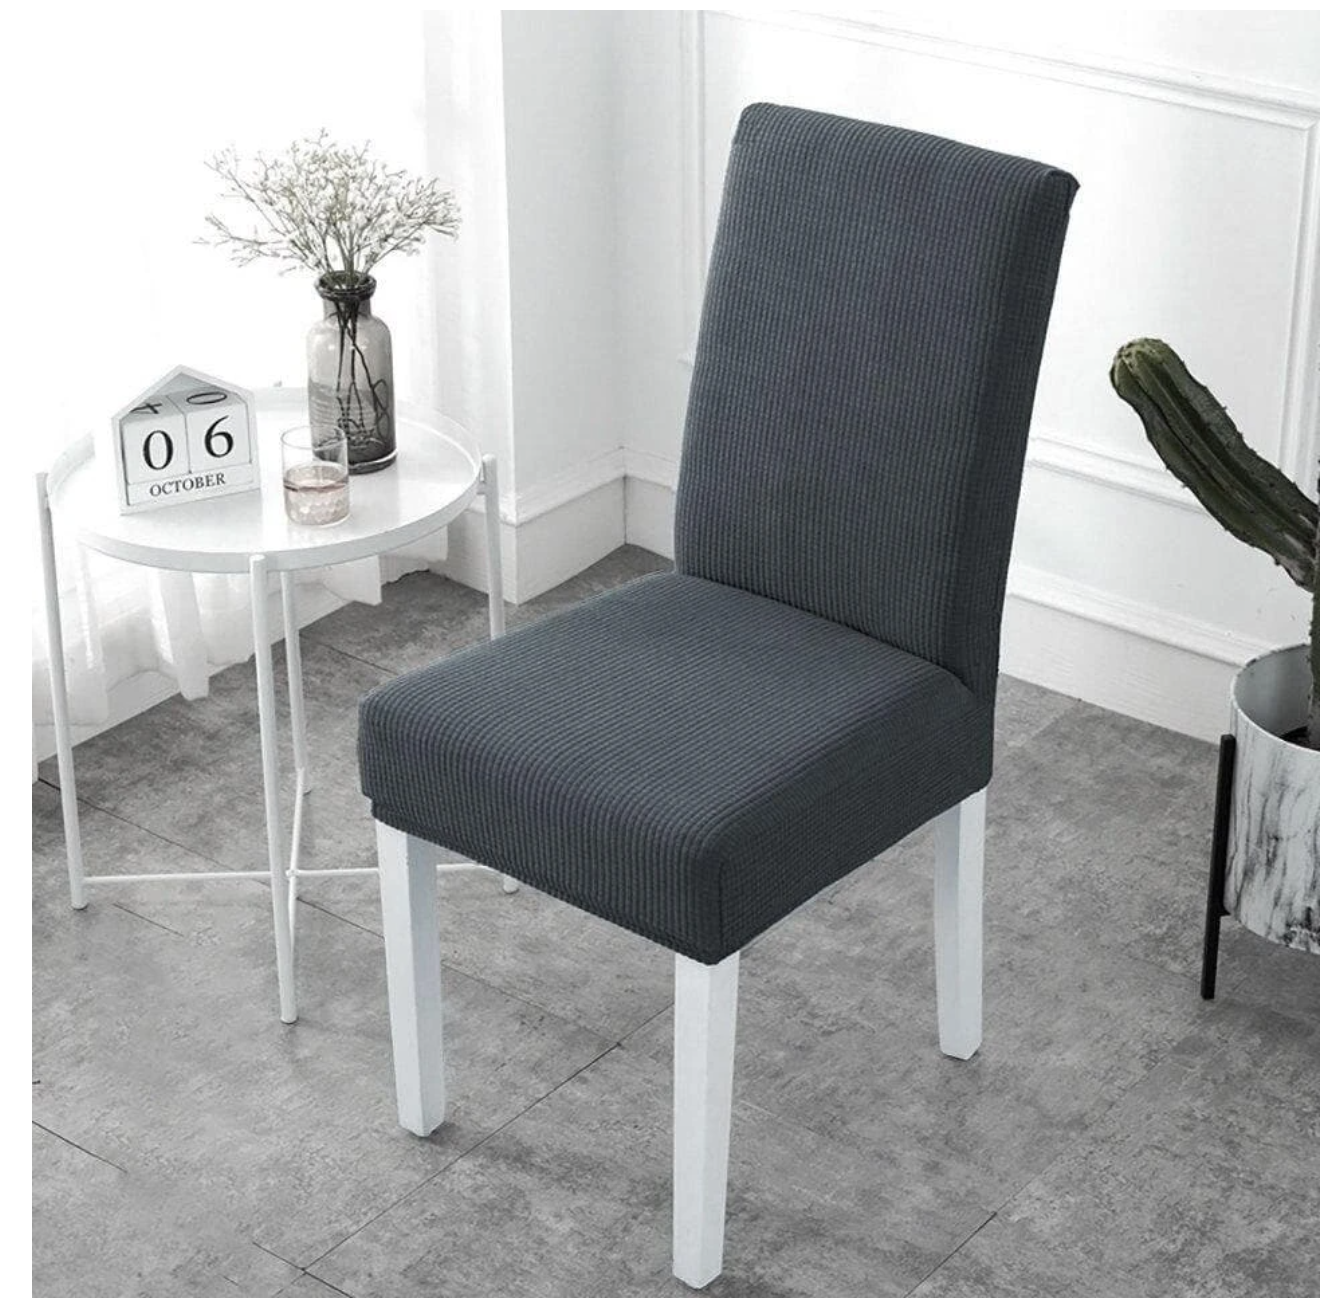 Homezo™ Chair Cover